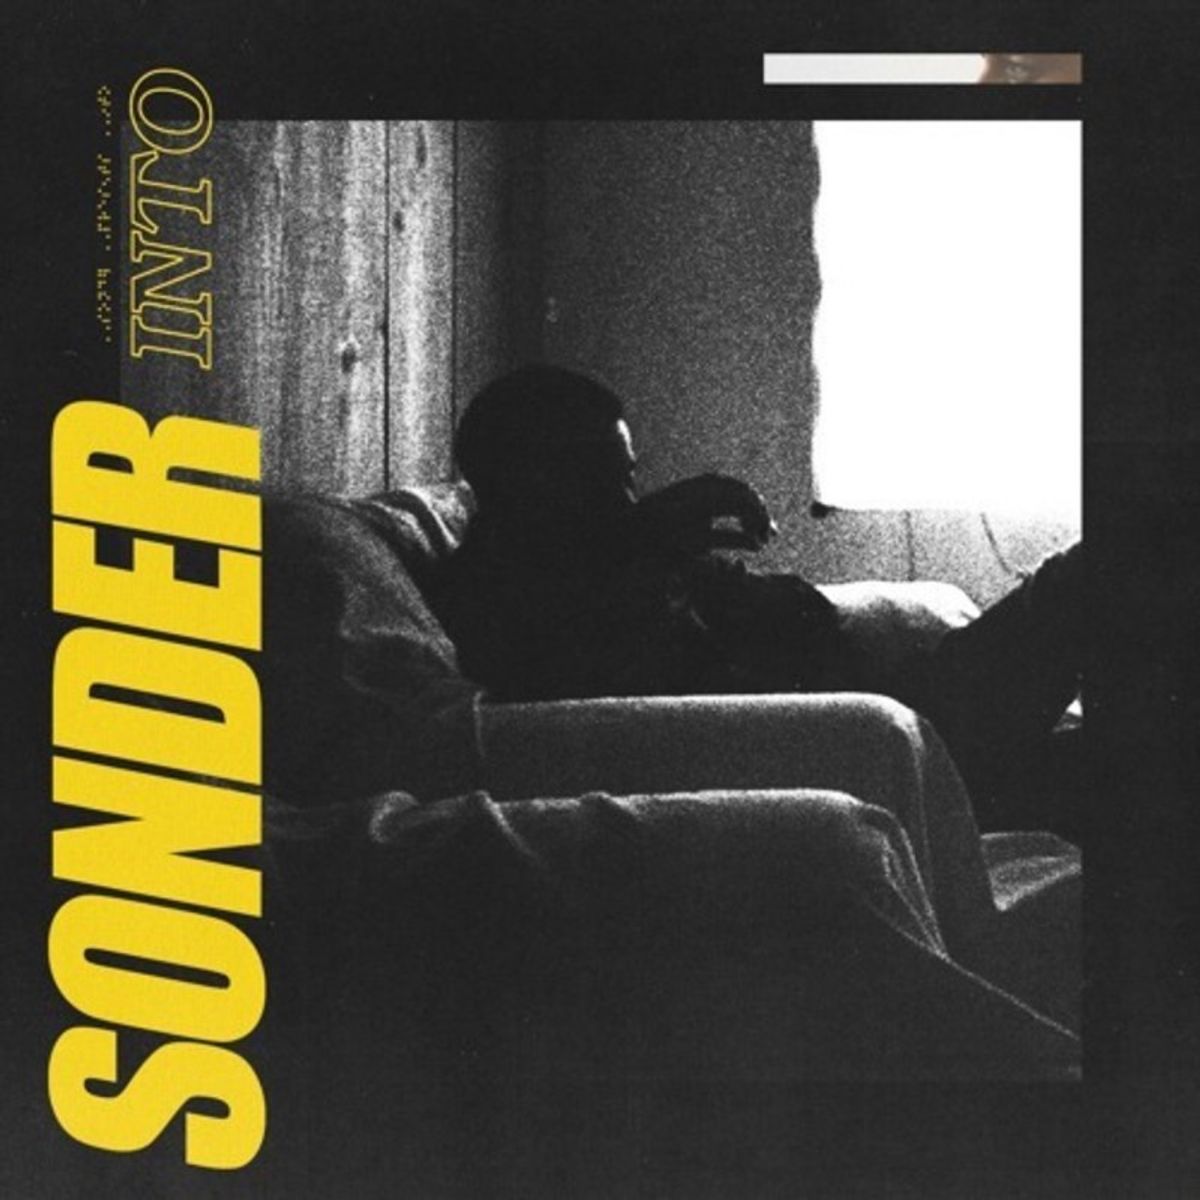 Sonder Presents The "Into" EP